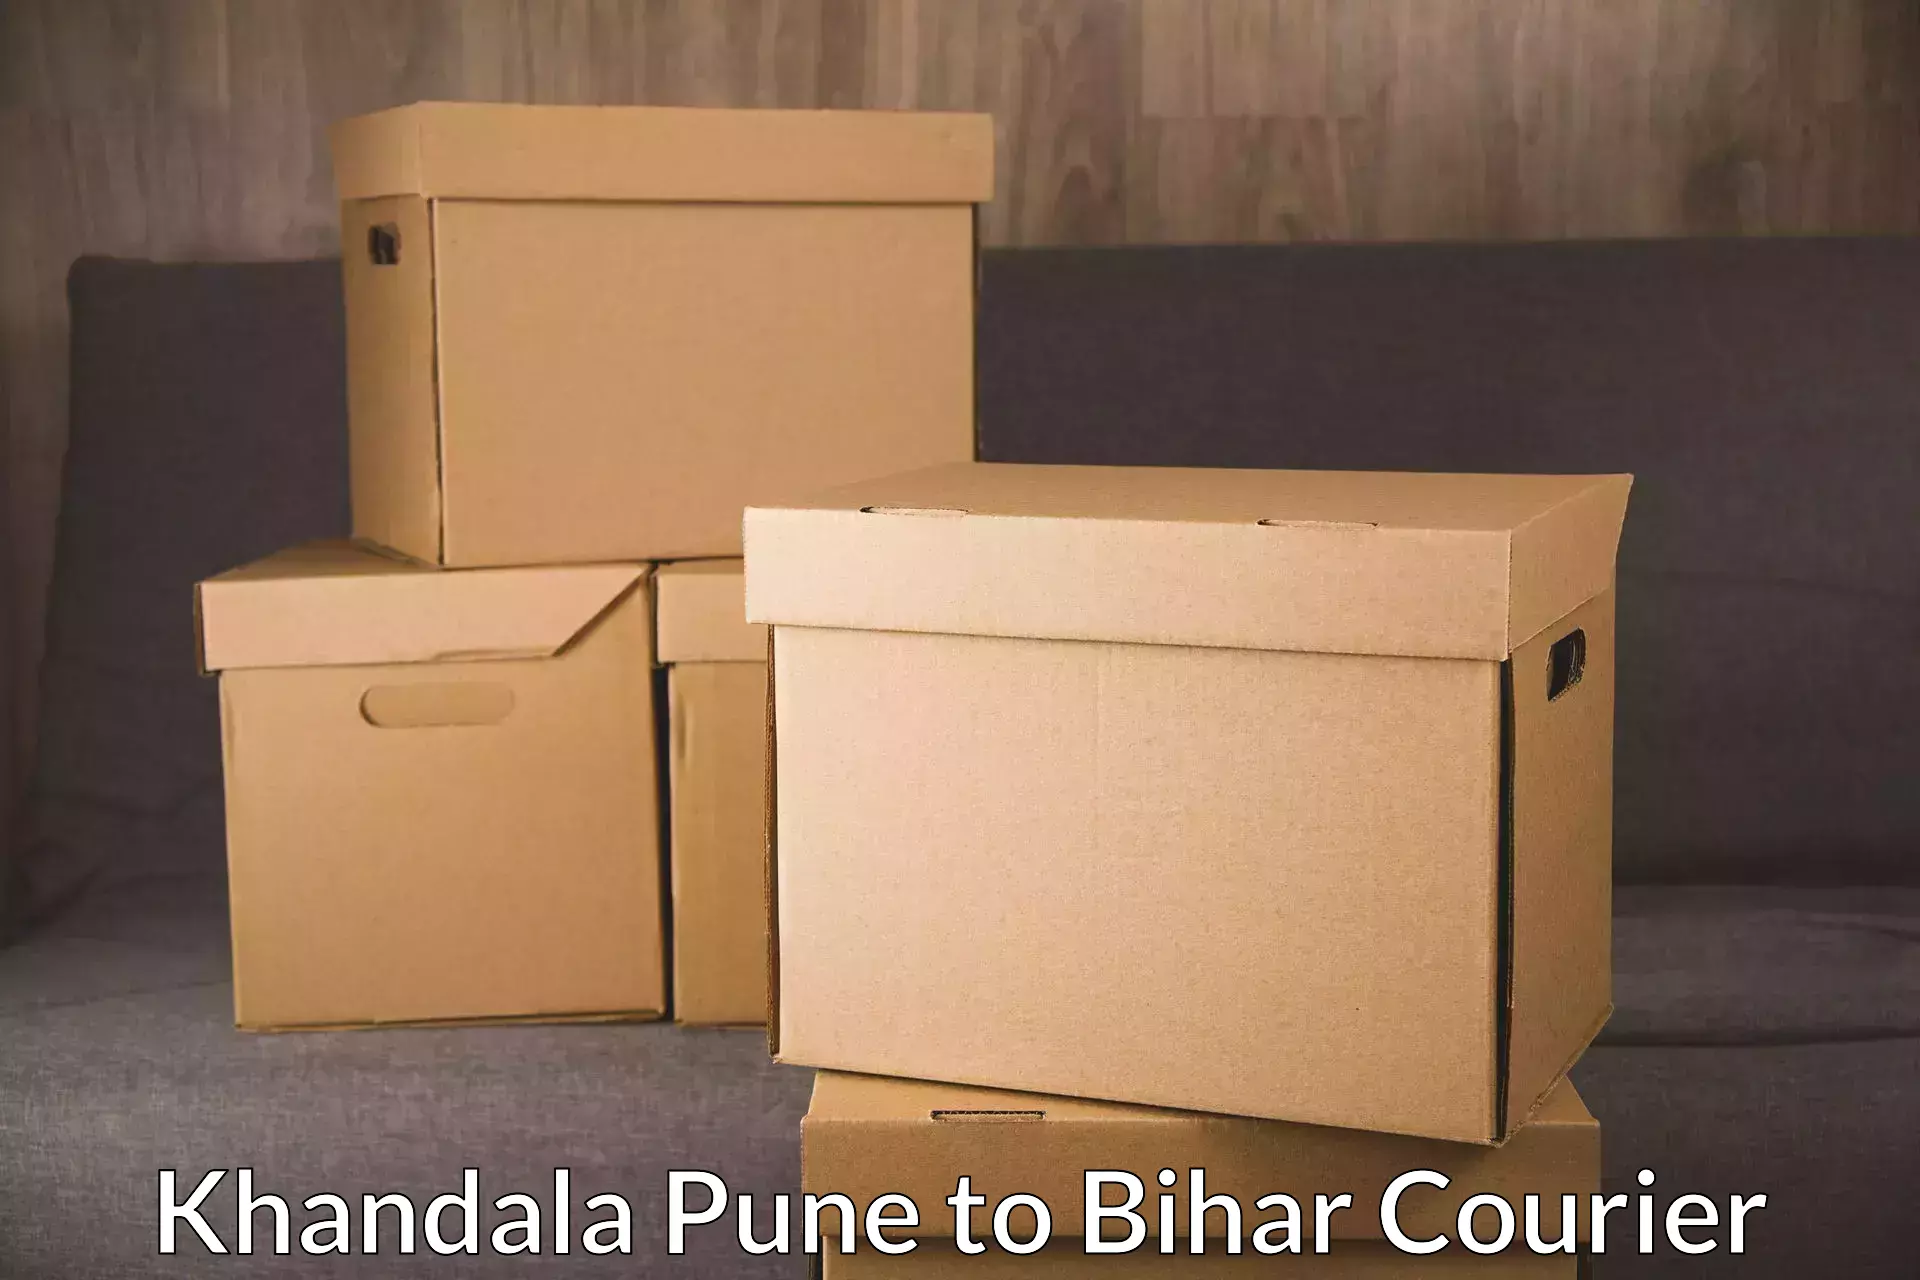 Quick booking process Khandala Pune to Bankipore